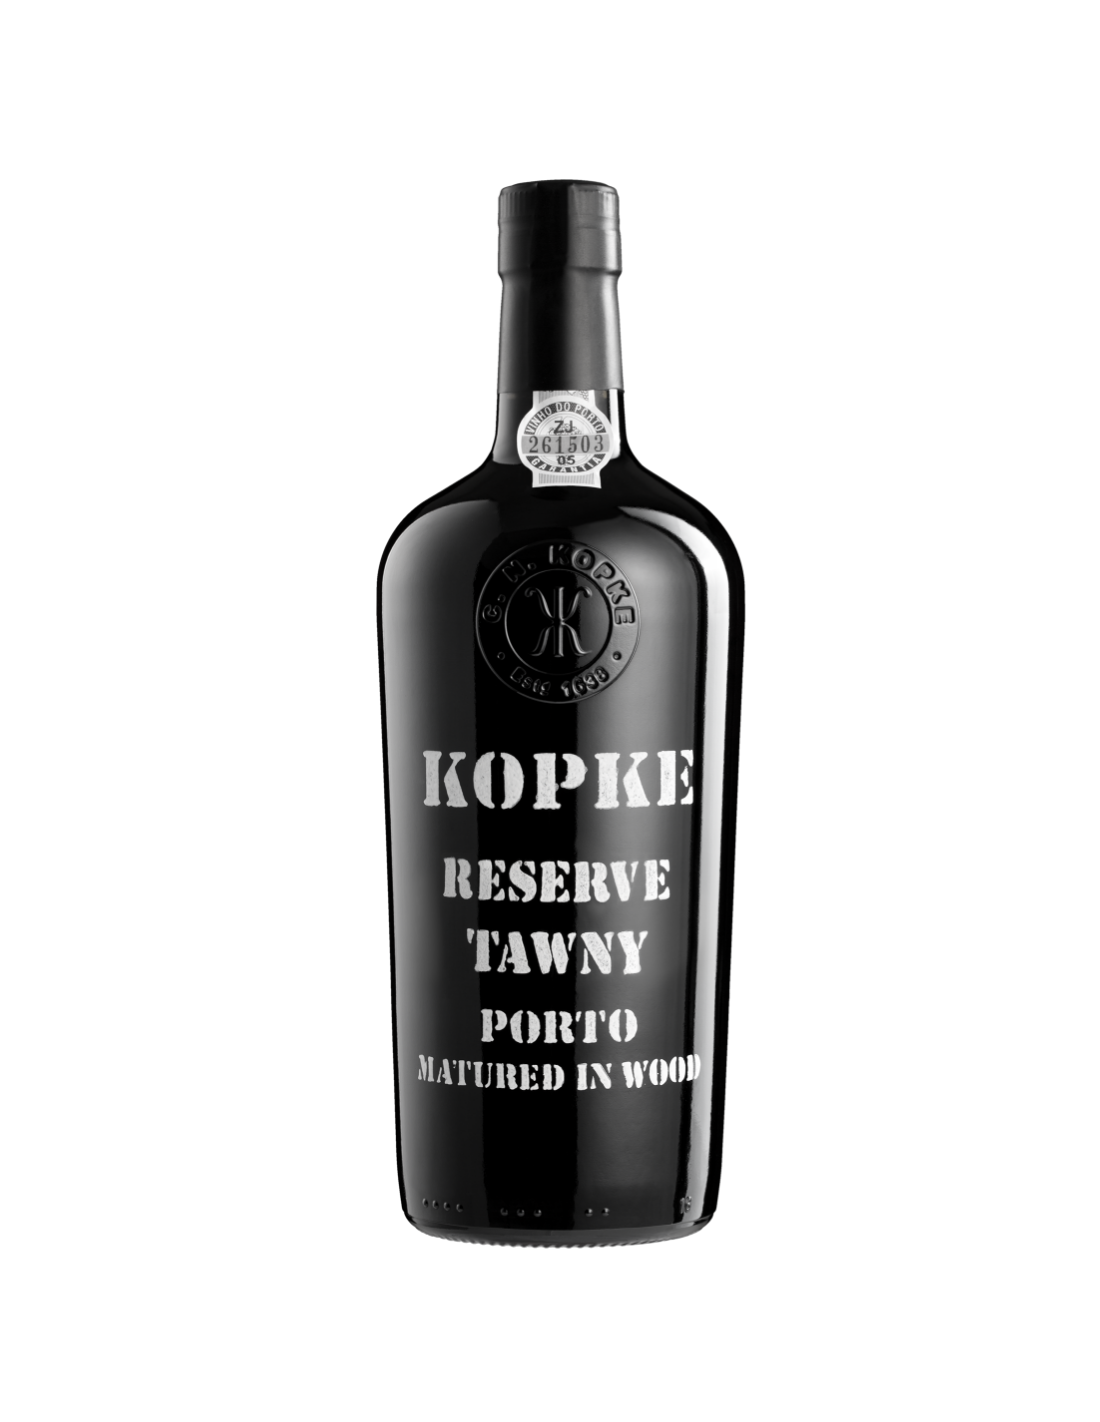 Vin porto rosu Kopke Reserve Tawny, 0.75L, 19.5% alc., Portugalia alcooldiscount.ro